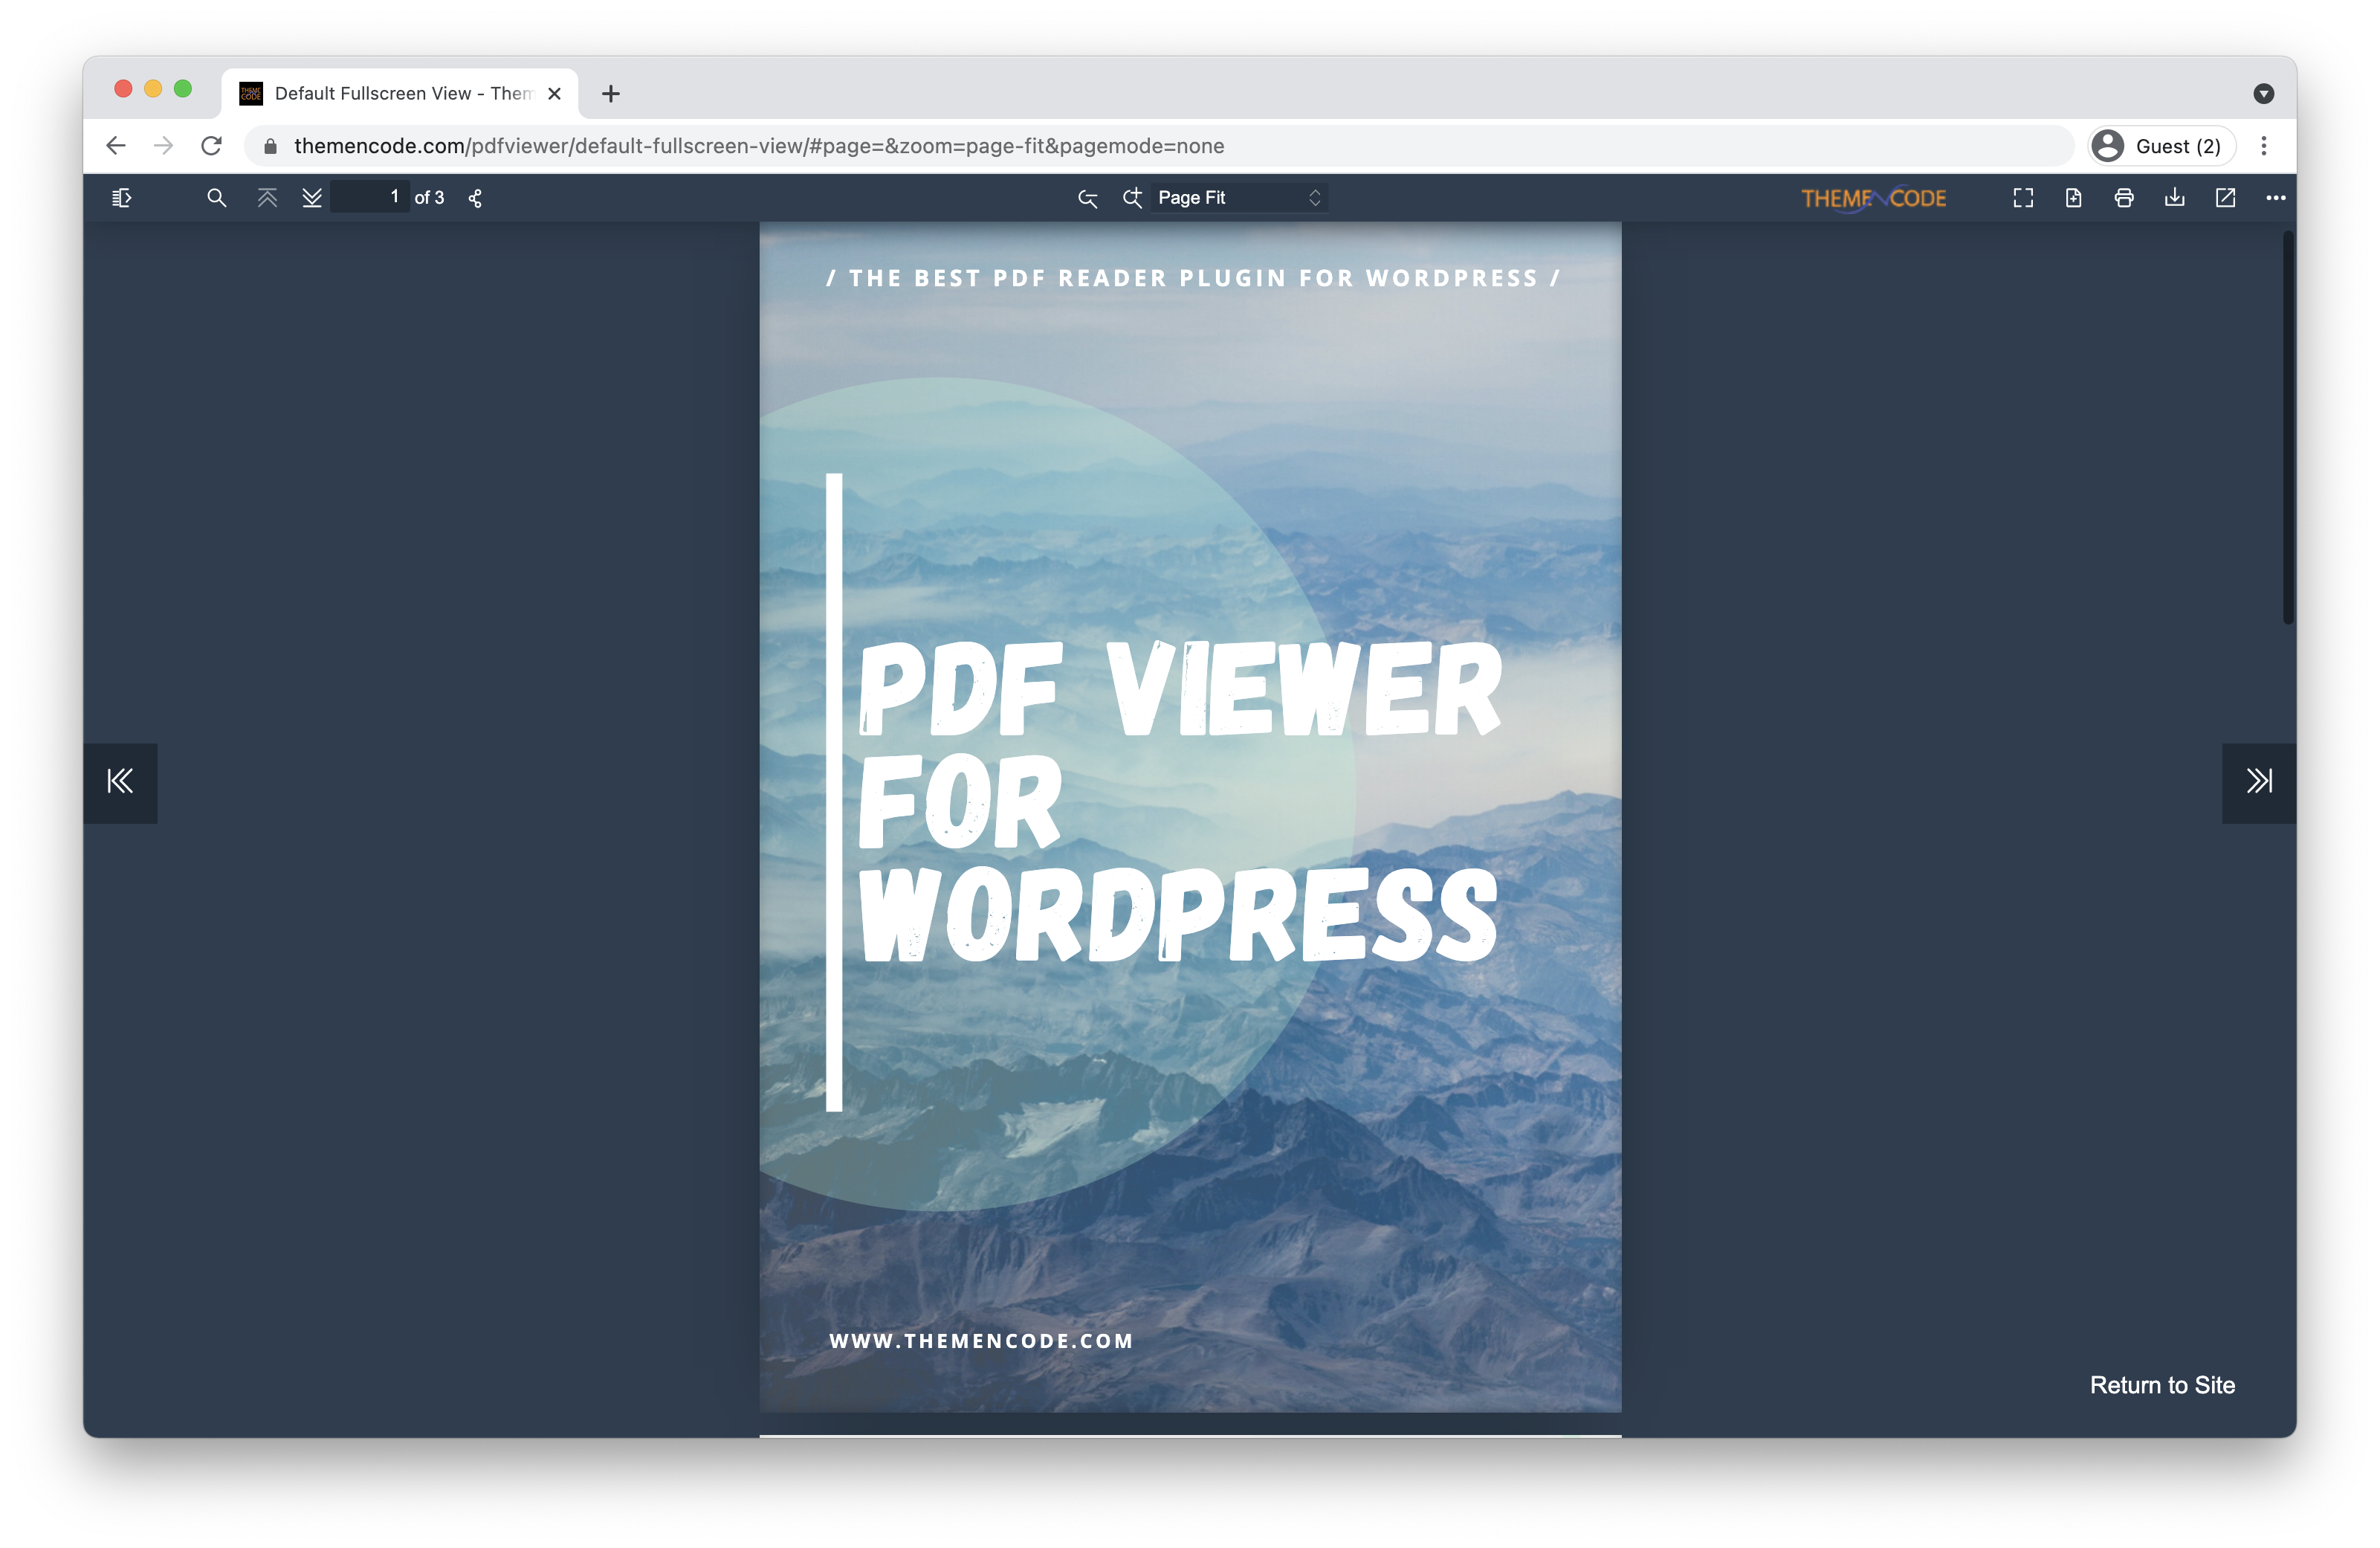 PDF viewer for WordPress 4